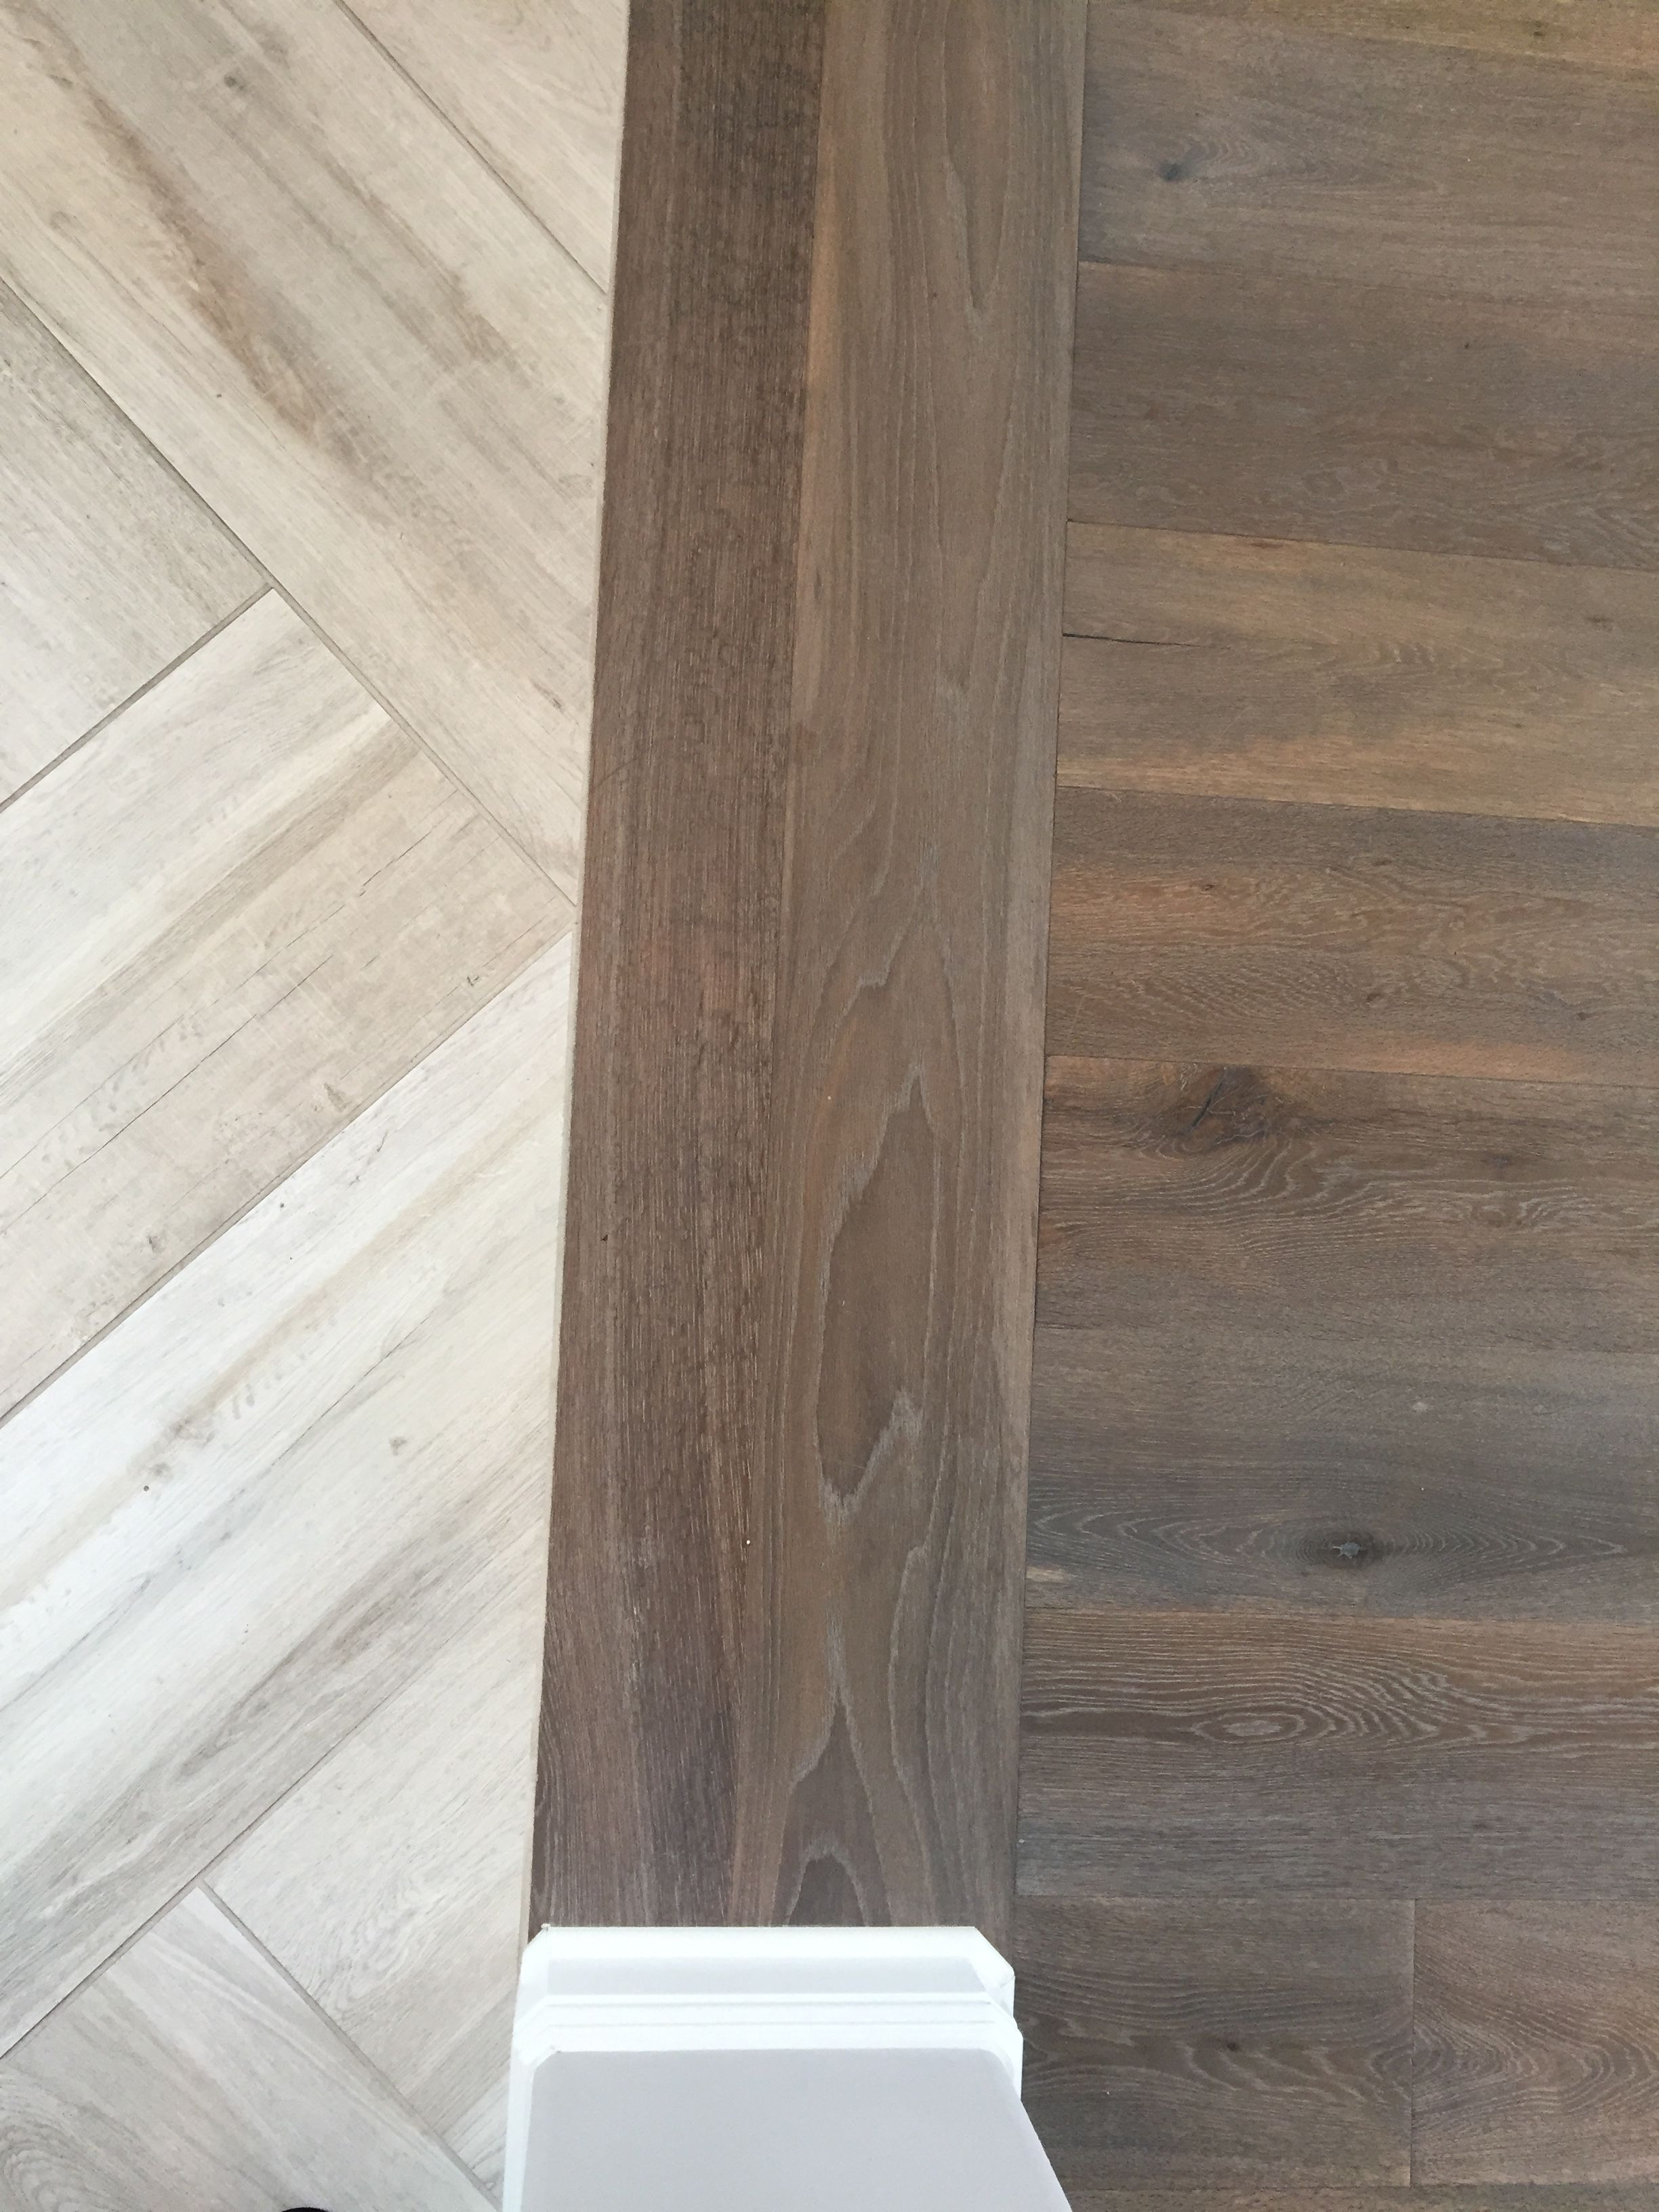 16 Famous Hardwood Flooring Uk Price 2024 free download hardwood flooring uk price of floor transition laminate to herringbone tile pattern model for floor transition laminate to herringbone tile pattern